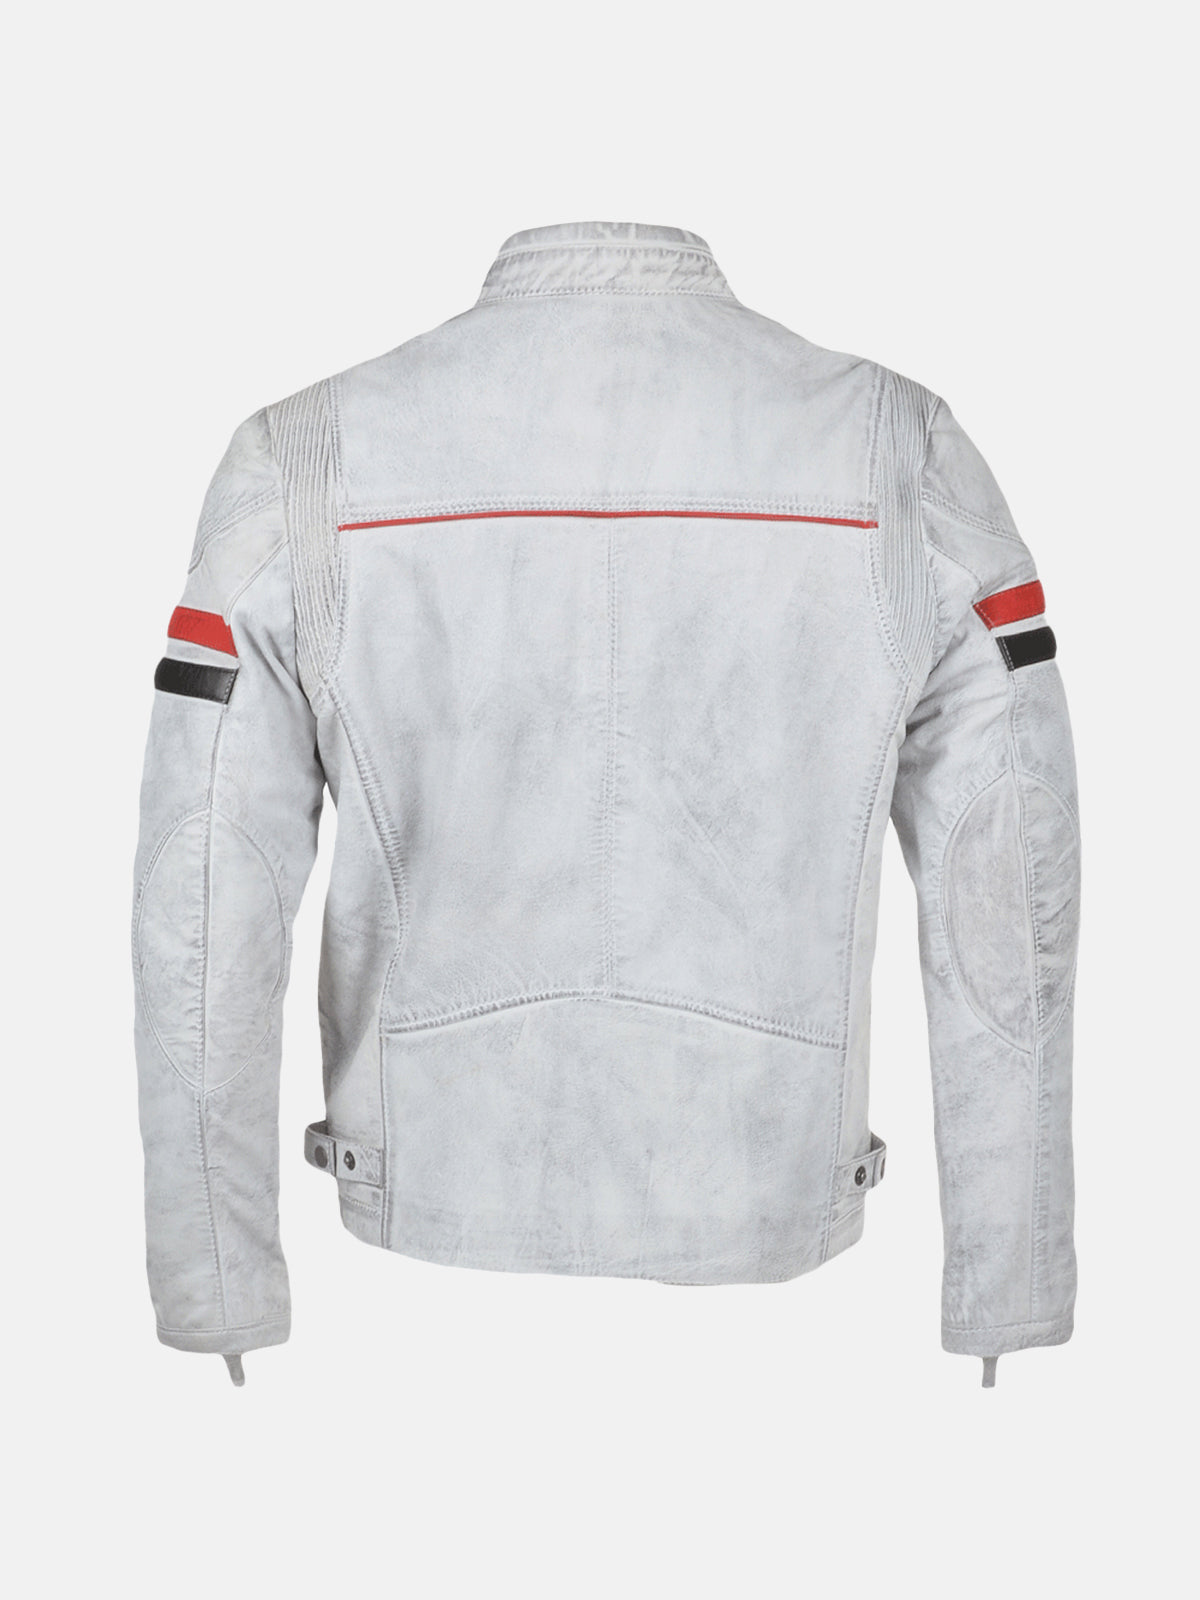 Men's White Leather Biker Jacket